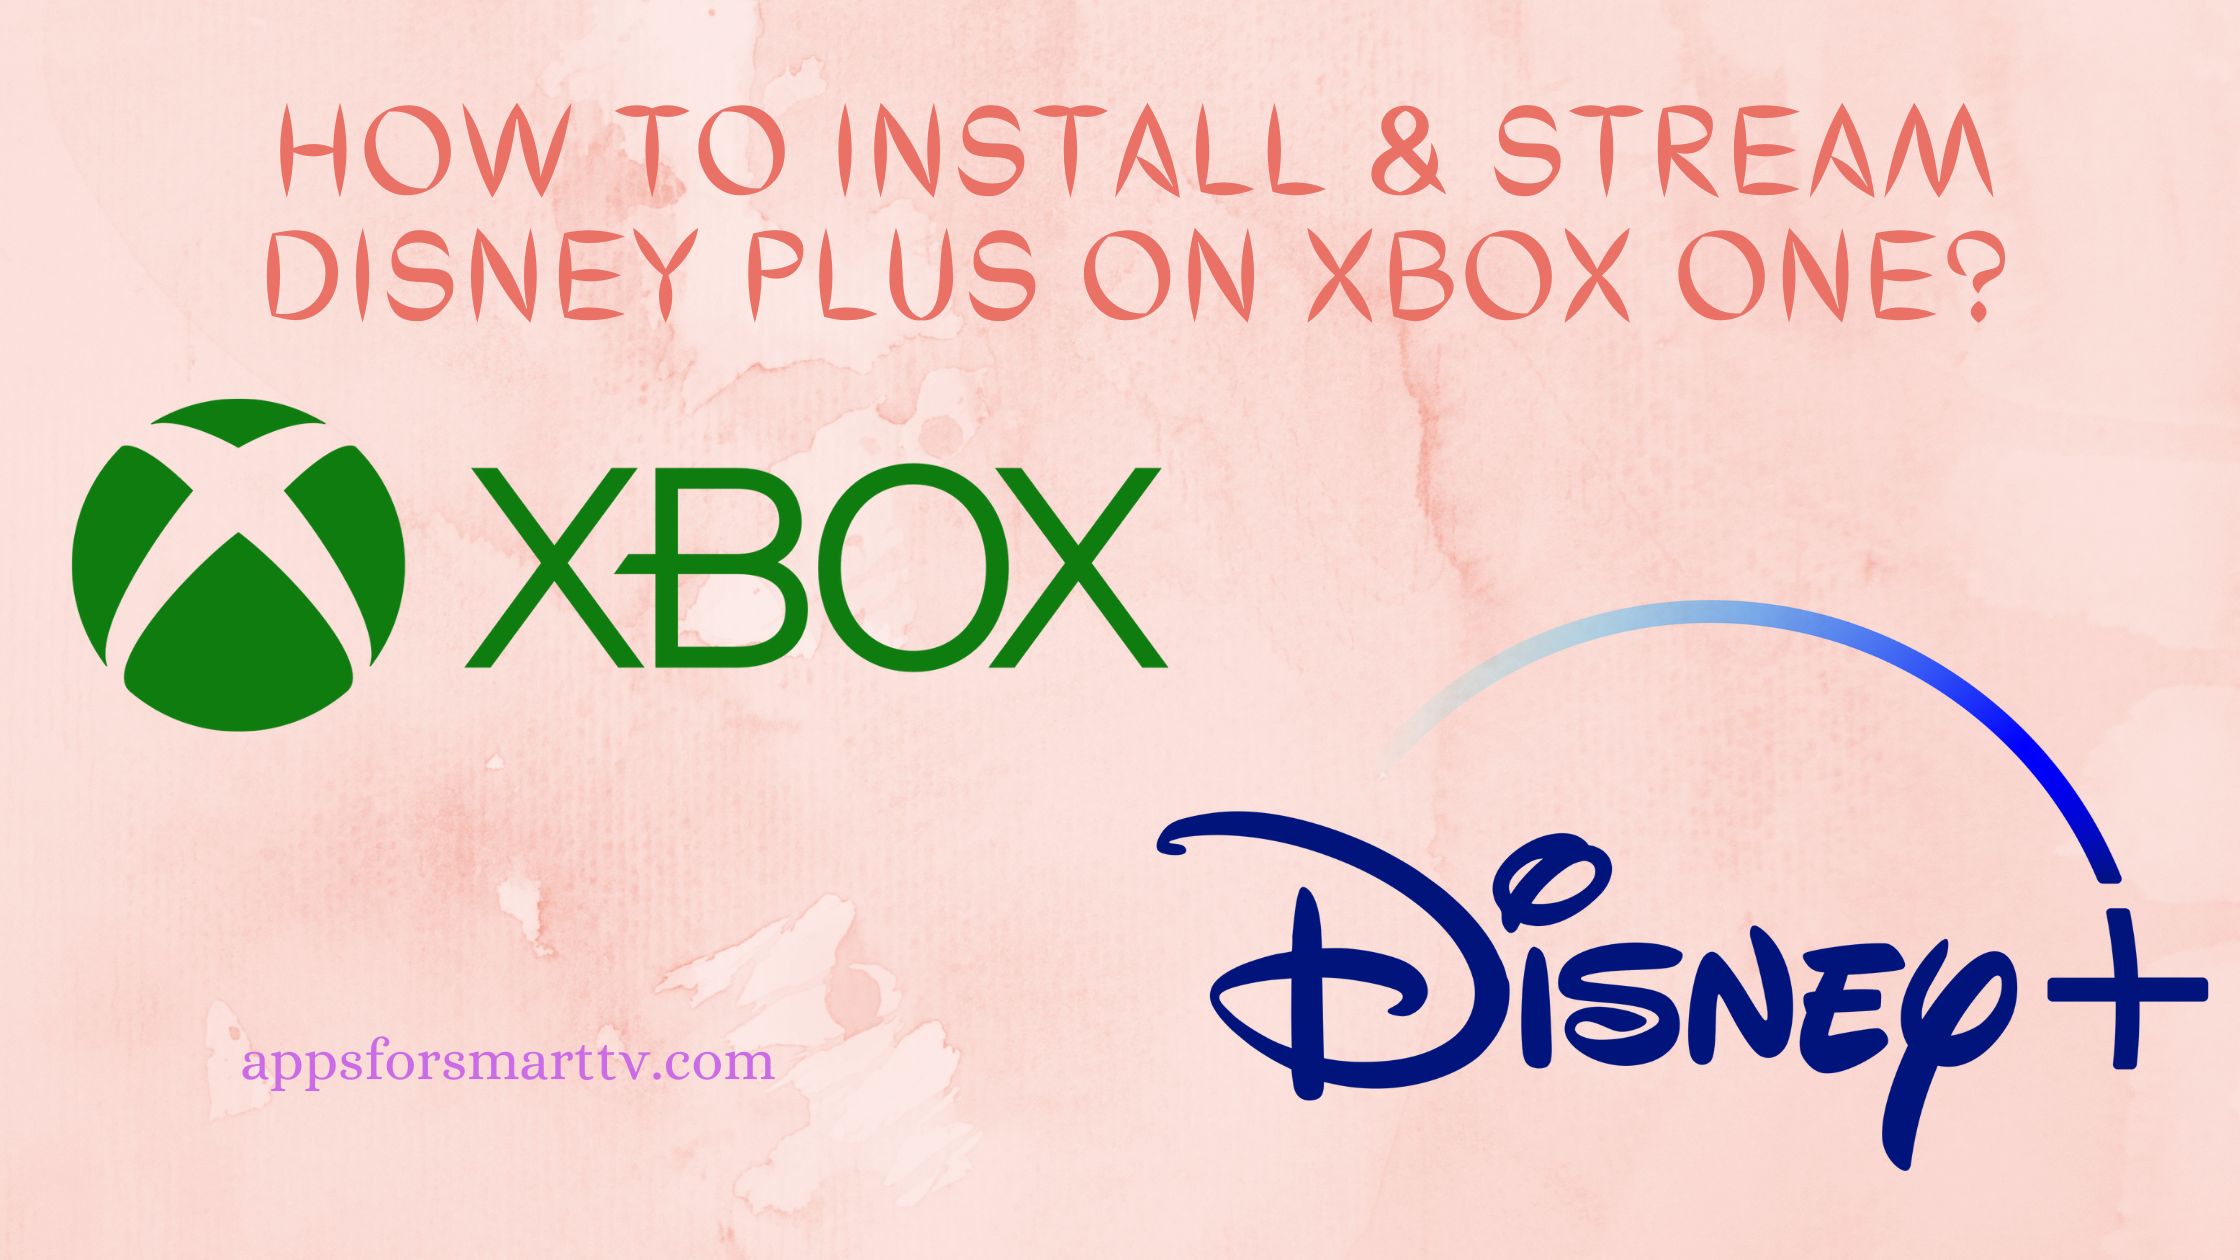 How to Install & Stream Disney Plus on Xbox One?